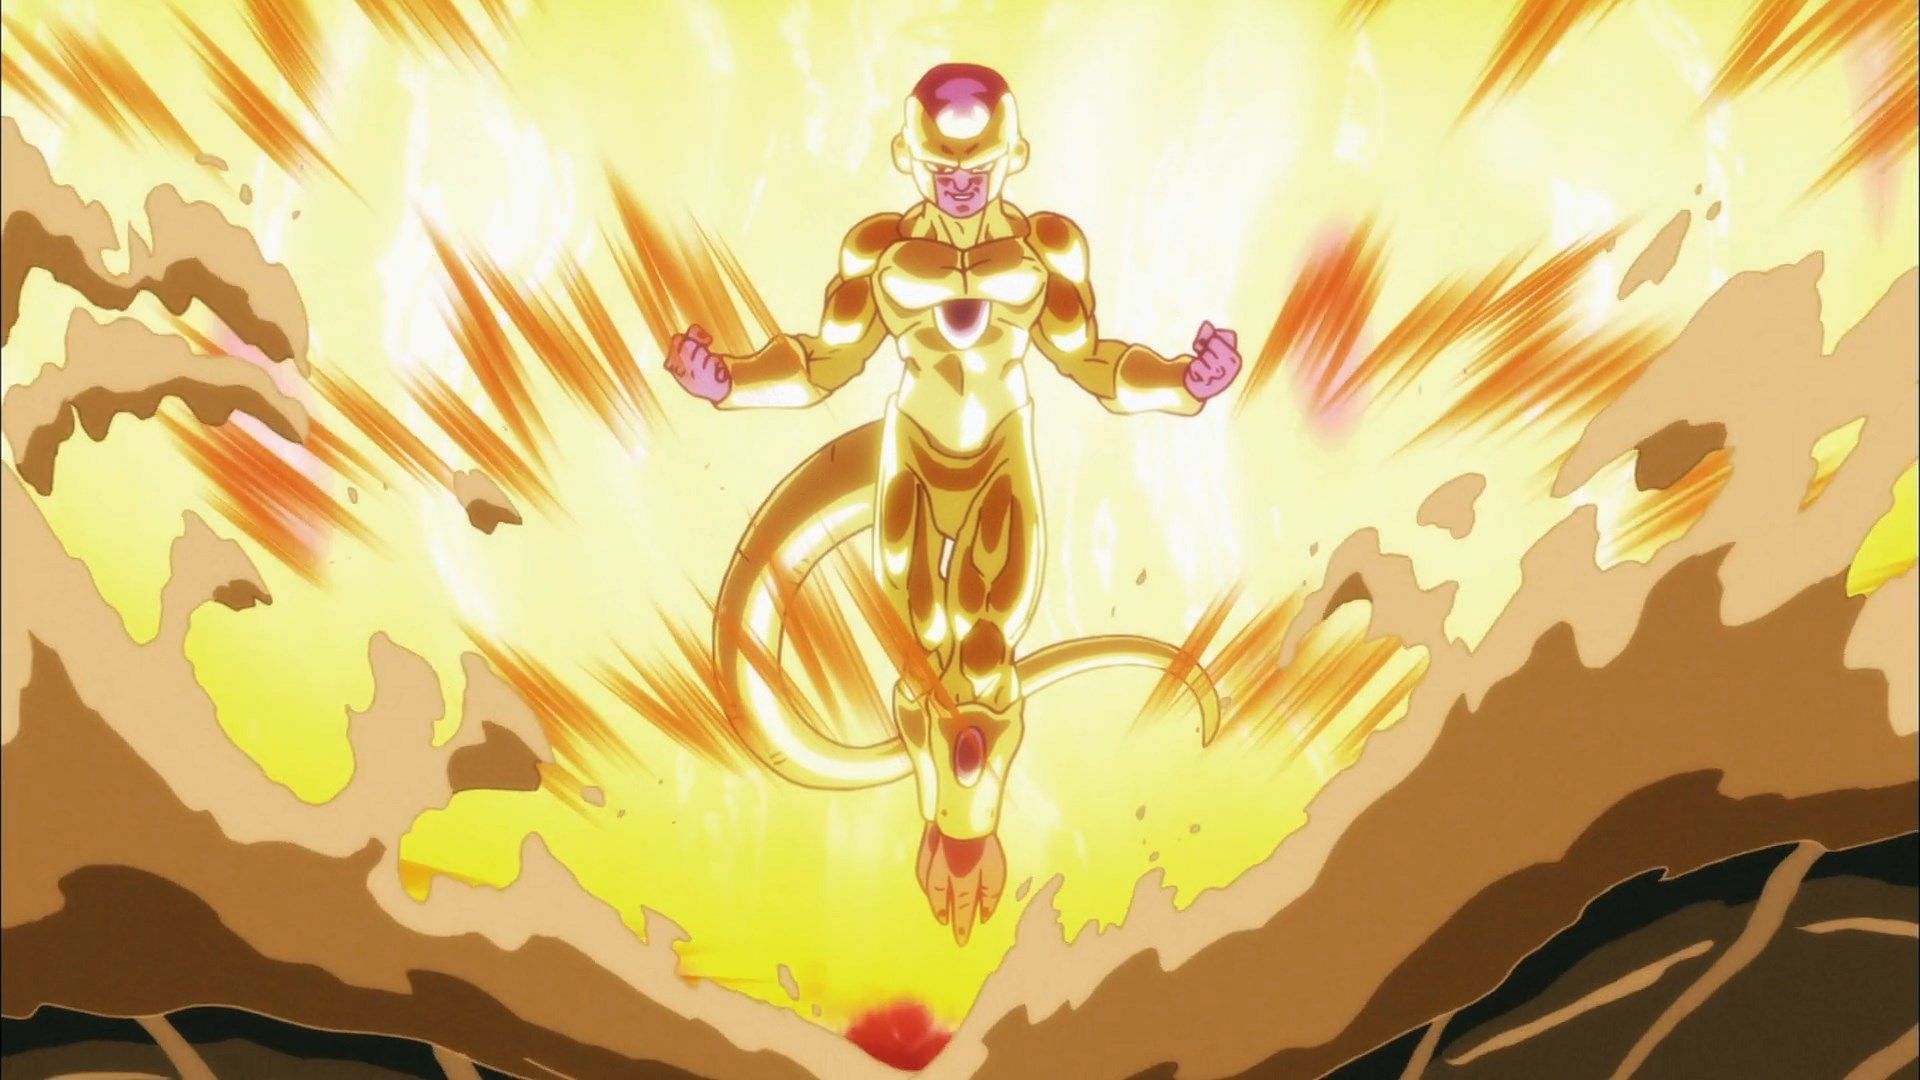 Frieza seen using his Golden Frieza powerup in Dragon Ball Super (Image via Toei Animation)